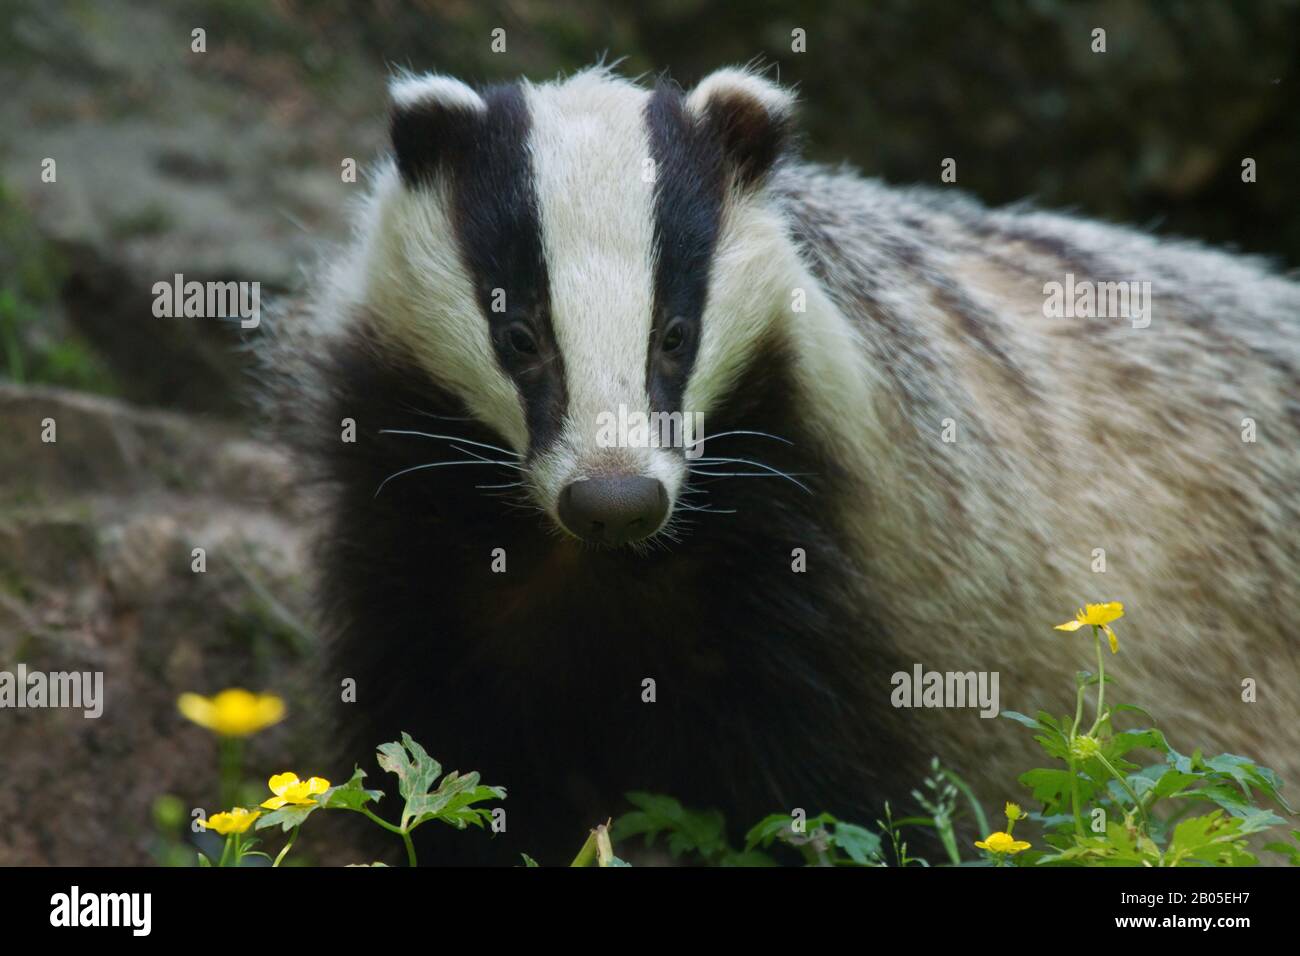 Old World badger, Eurasian badger (Meles meles), in ameadow, Germany Stock Photo